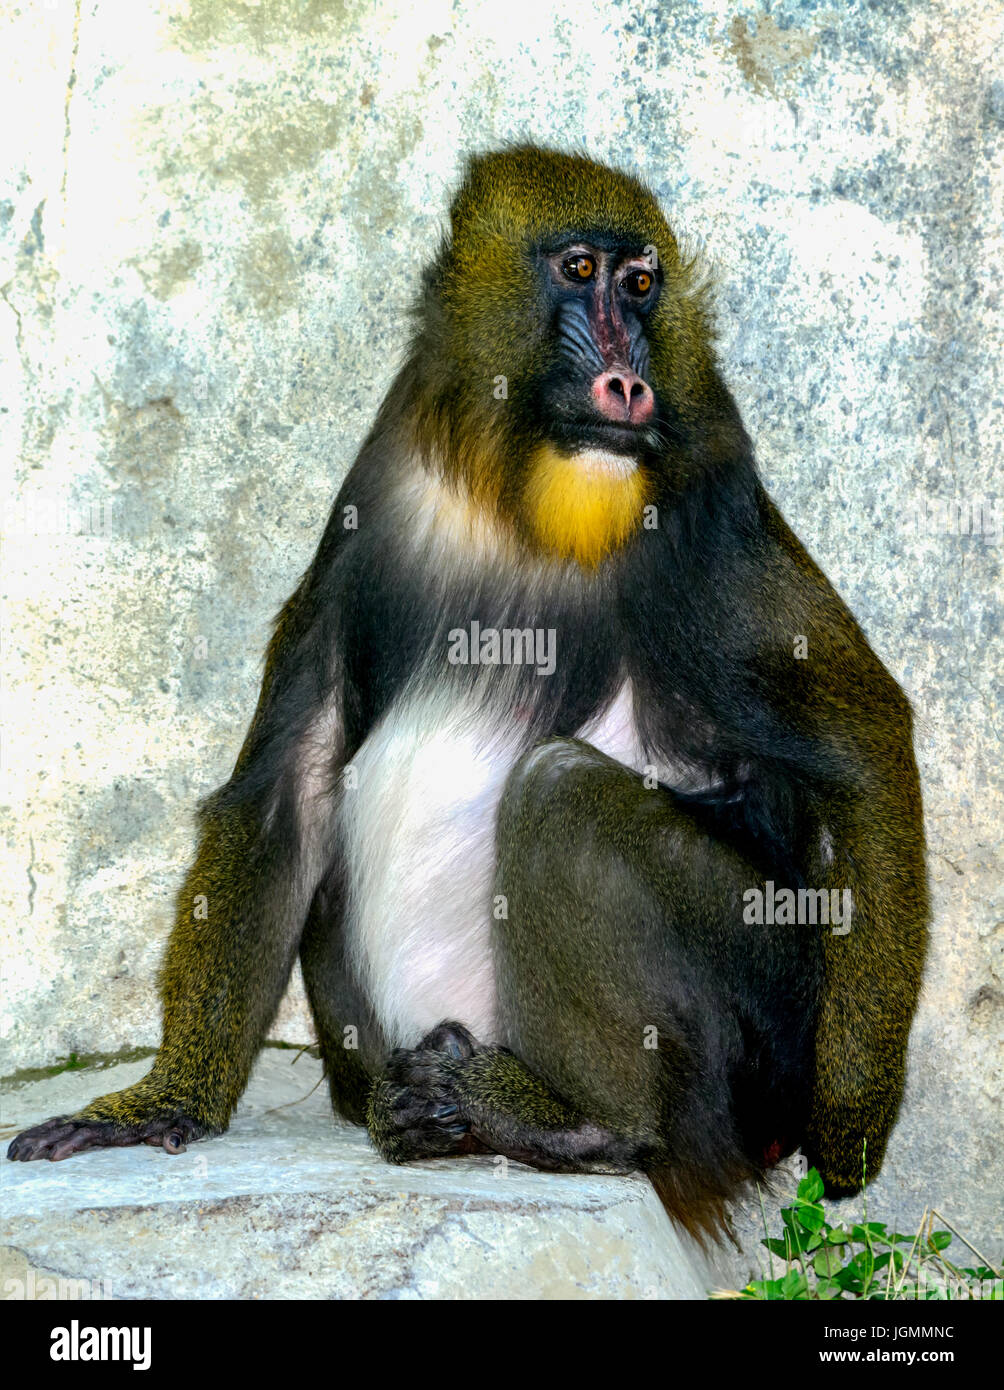 Mandrill (Mandrillus sphinx) Primate sitting in enclosure. Colorfull face. Vivid eyes. Sad expression Stock Photo